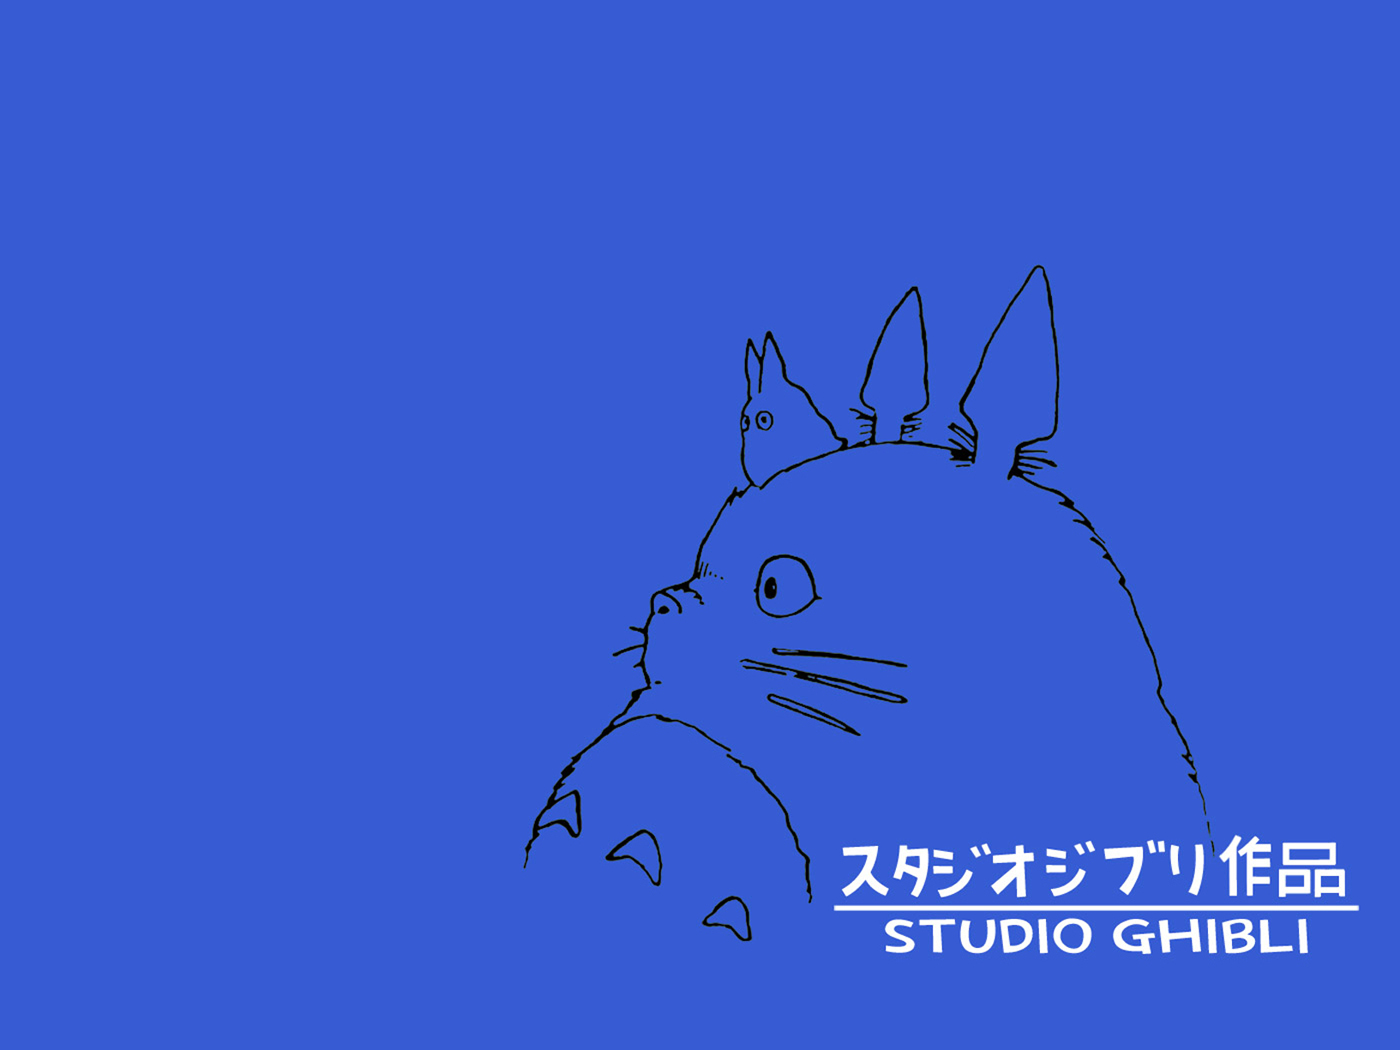 Hd Wallpapers Studio Ghibli Scenery 2206 X 1432 549 Kb Jpeg HD